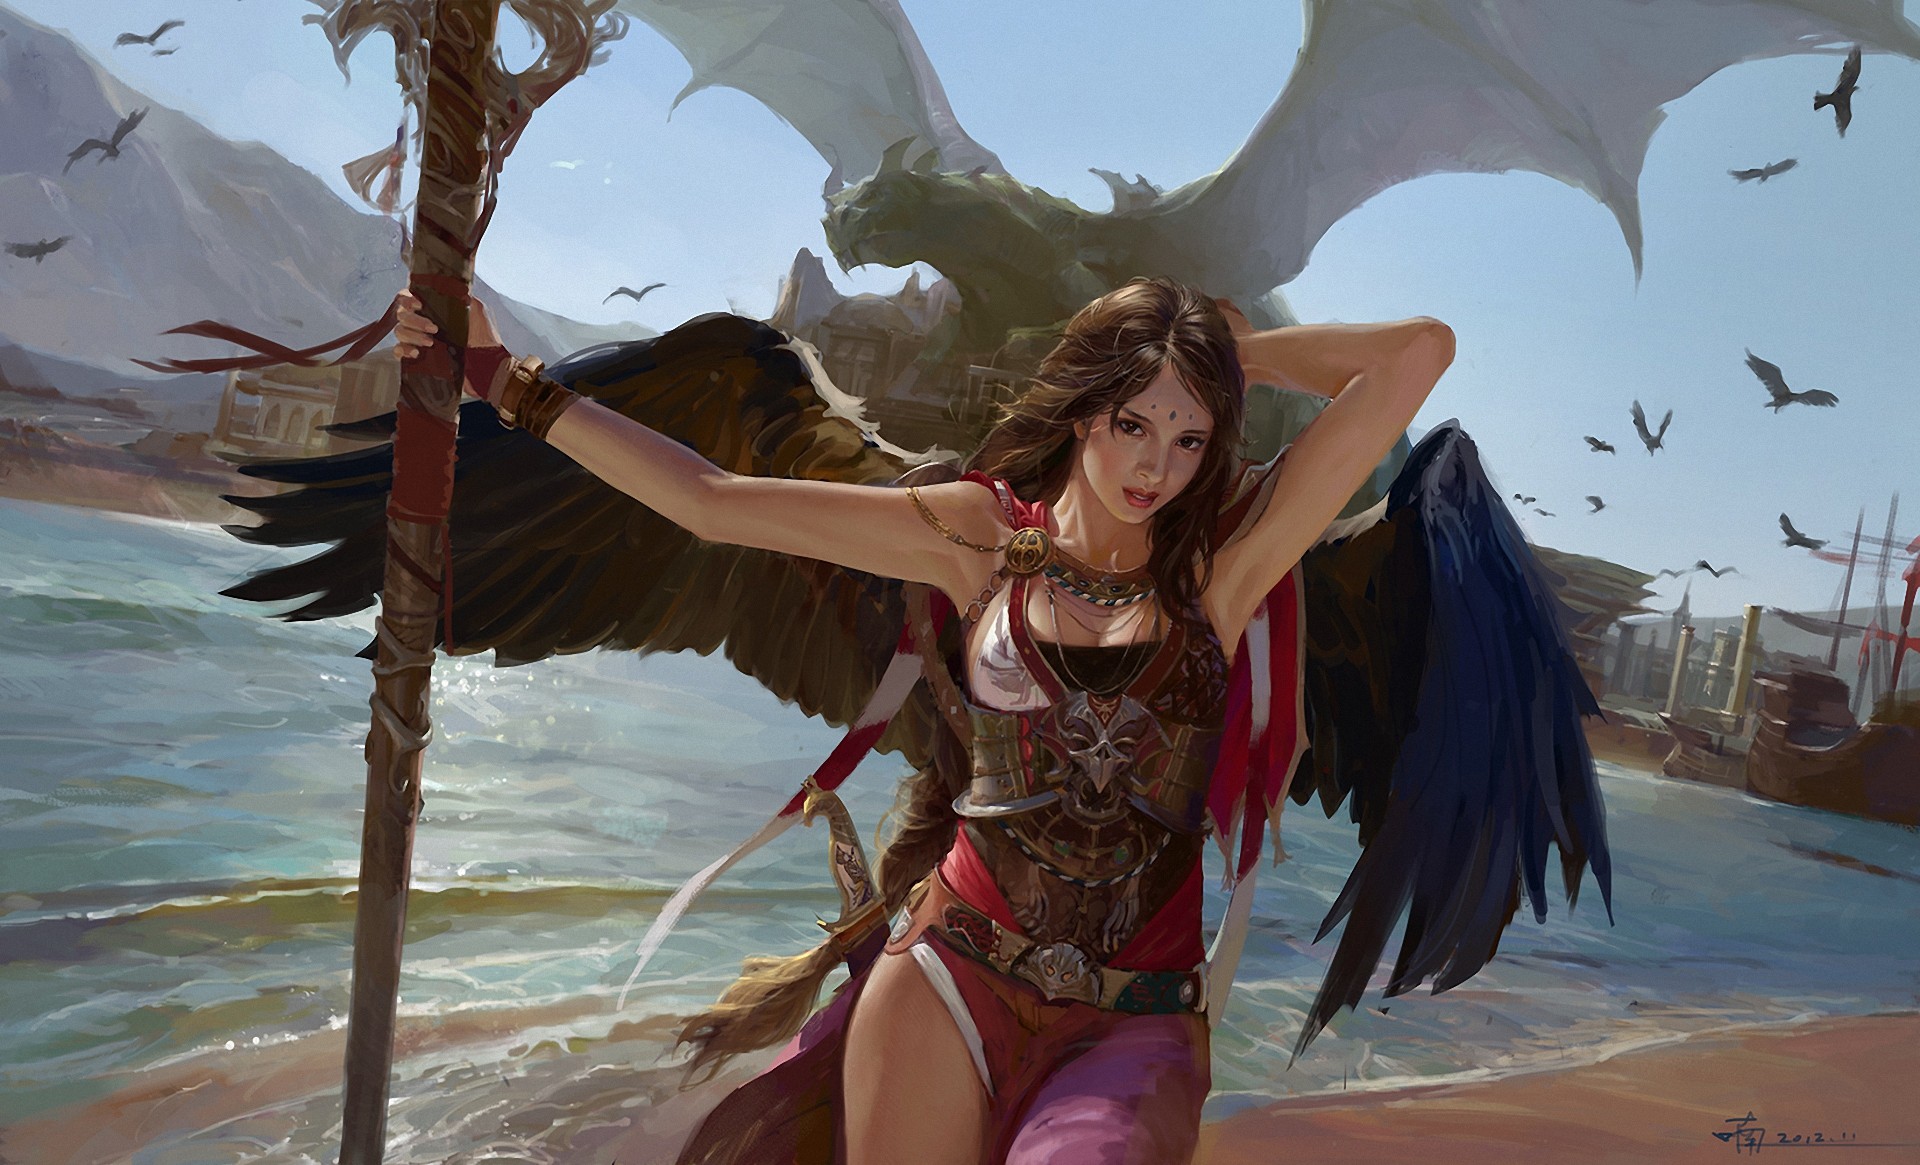 General 1920x1165 dragon fantasy girl fantasy art arms up creature artwork wings angel women